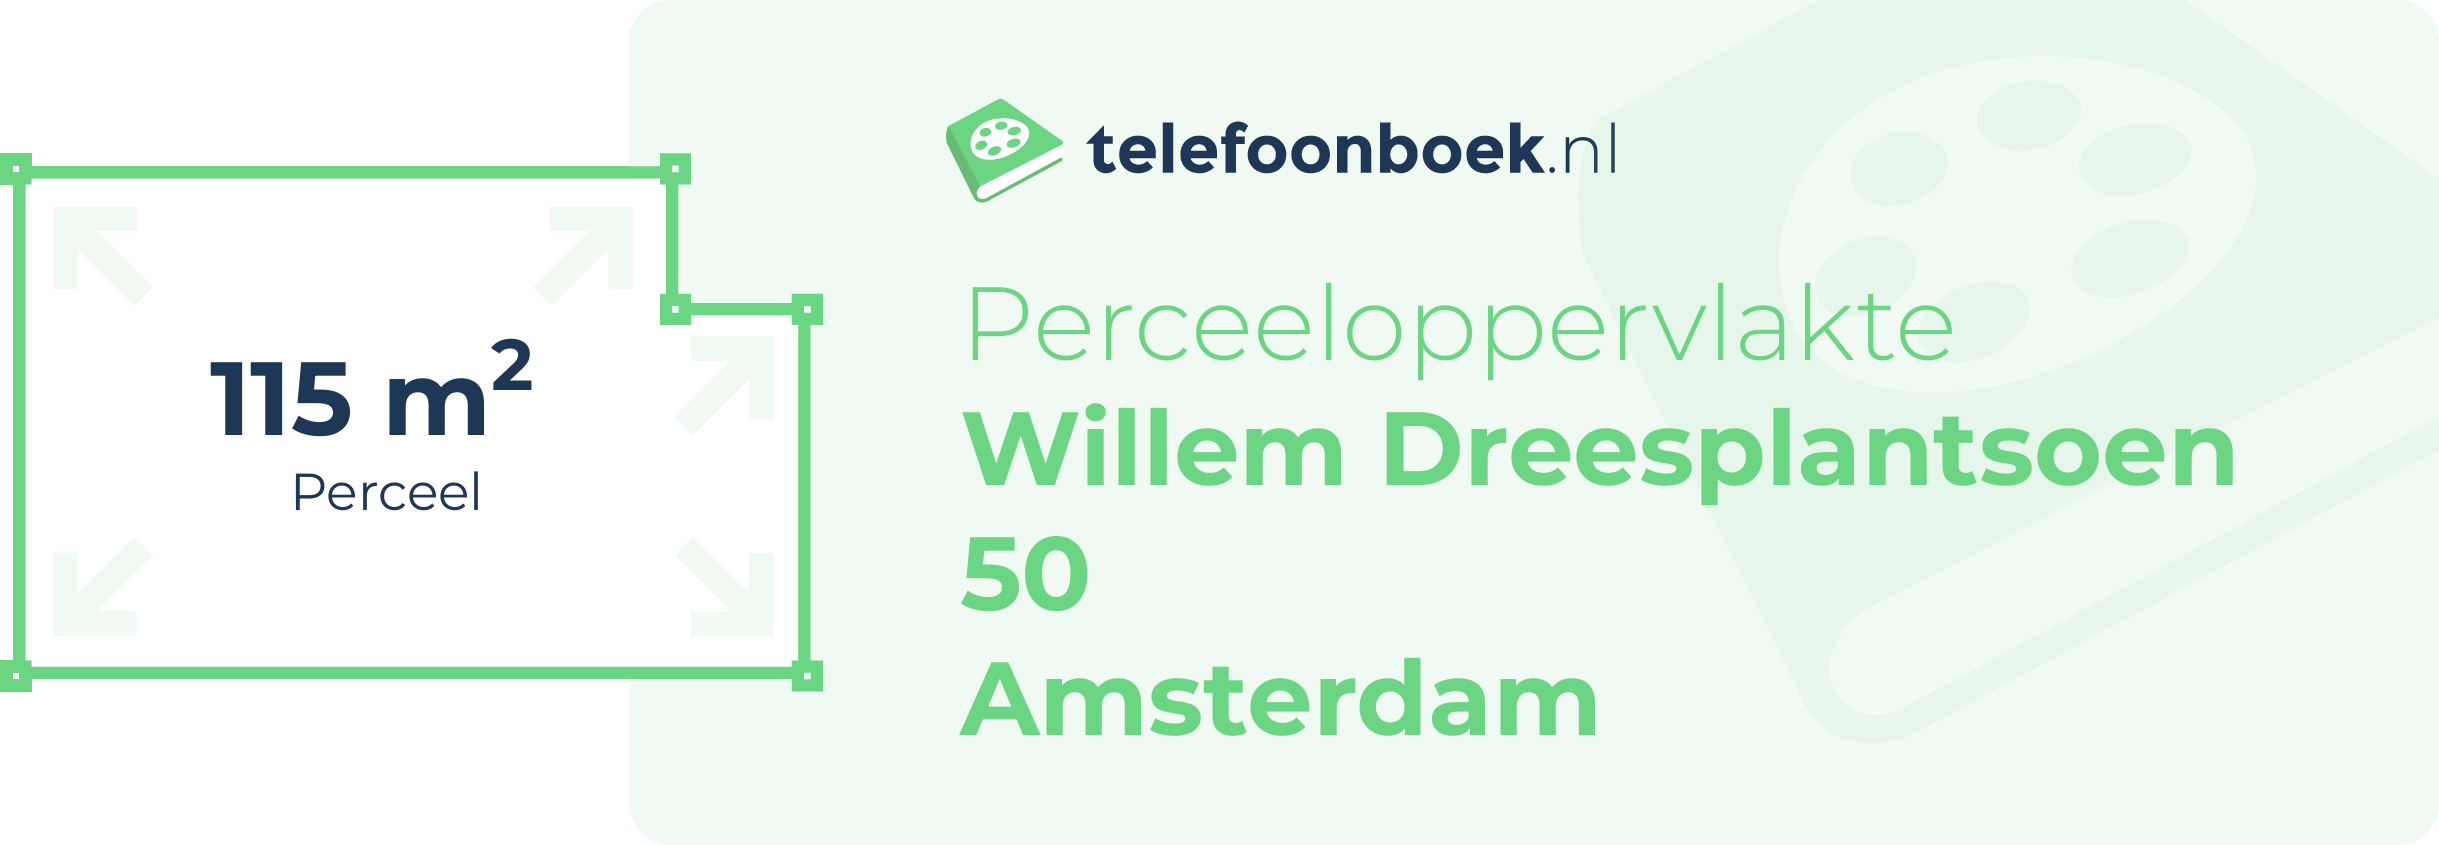 Perceeloppervlakte Willem Dreesplantsoen 50 Amsterdam